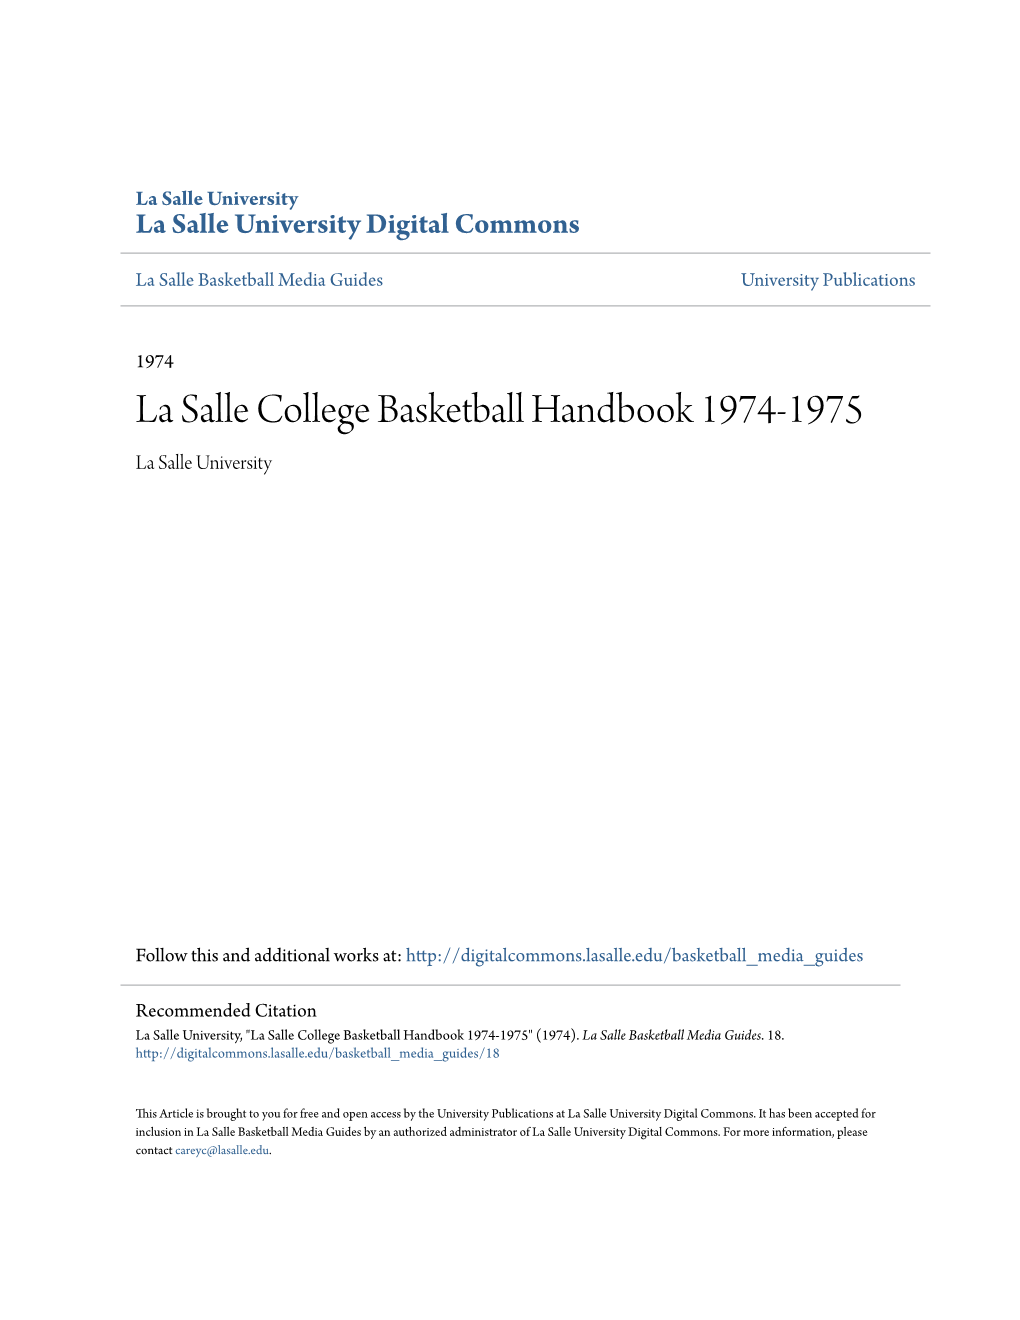 La Salle College Basketball Handbook 1974-1975 La Salle University